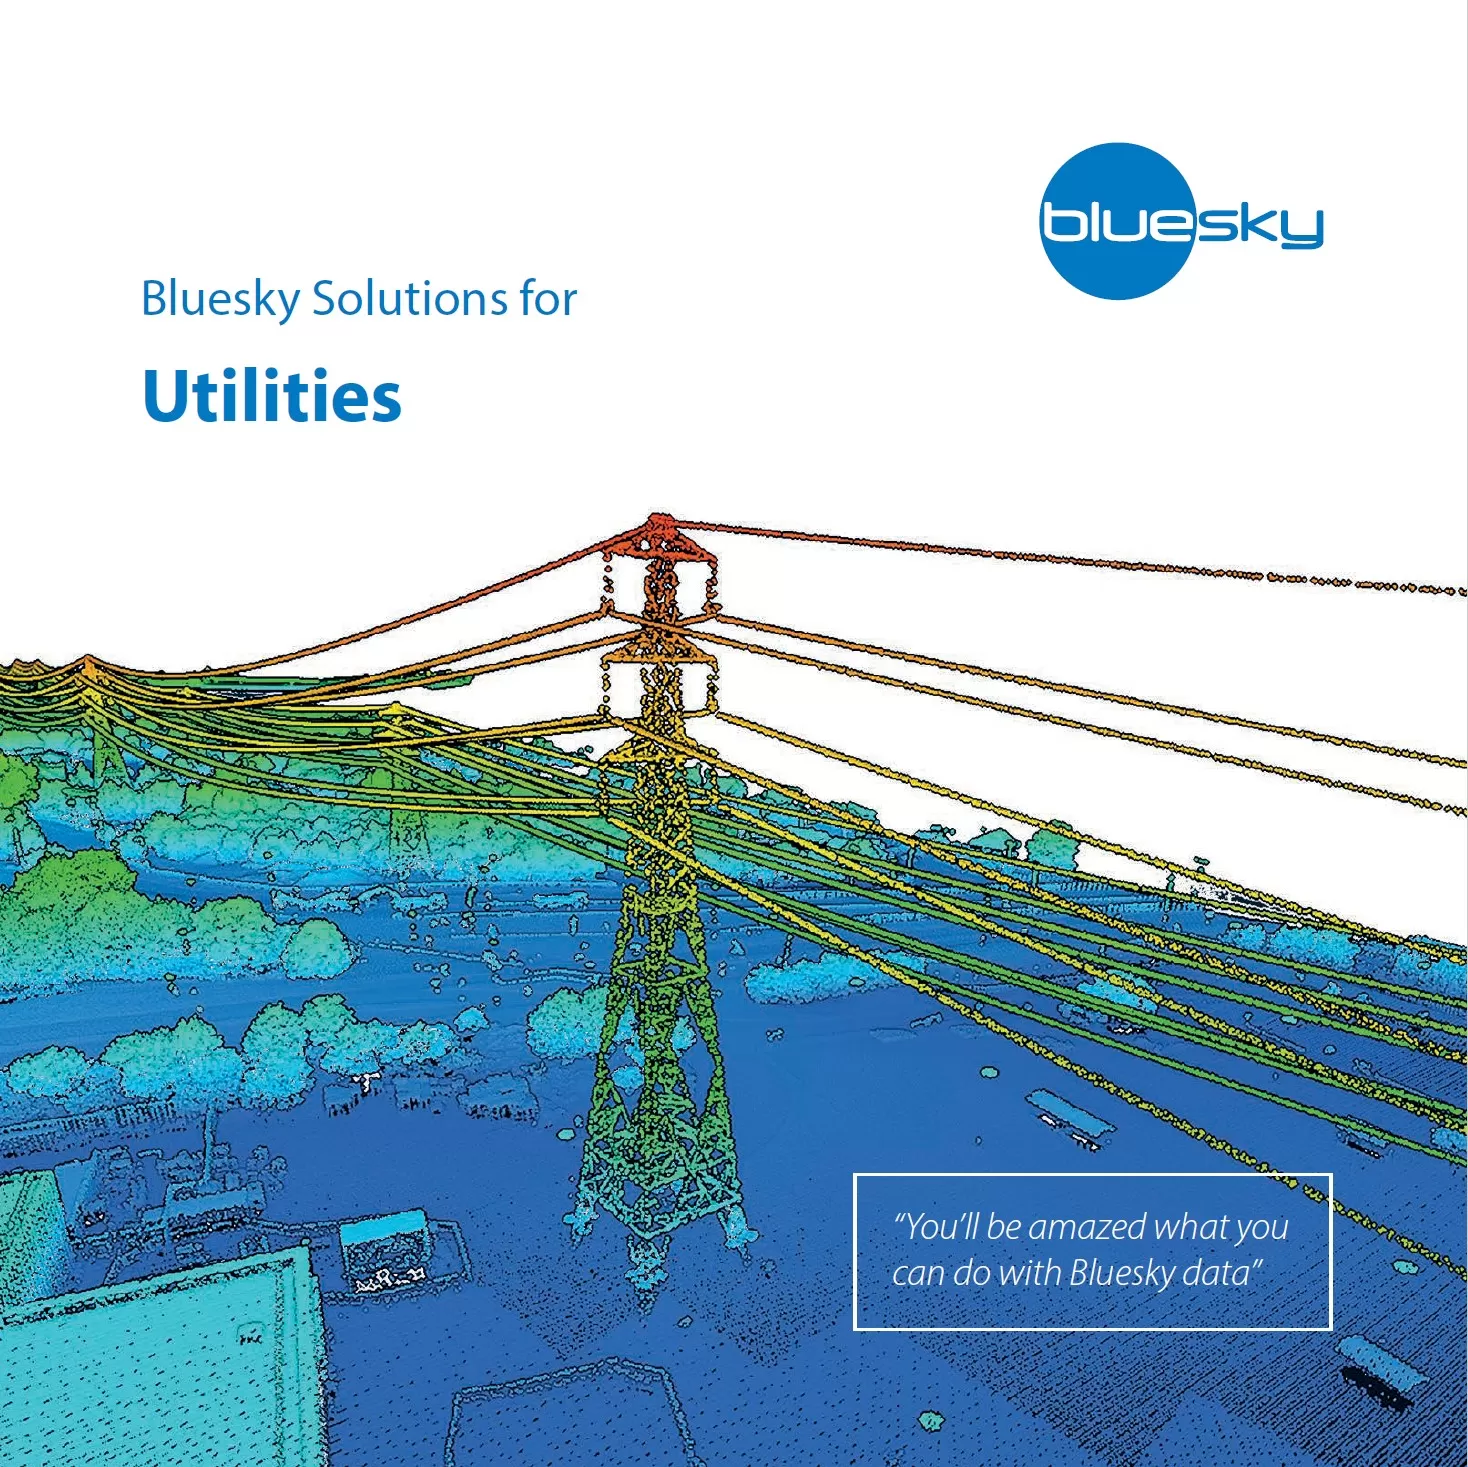 Thumbnail image showing Bluesky's Utilities Brochure